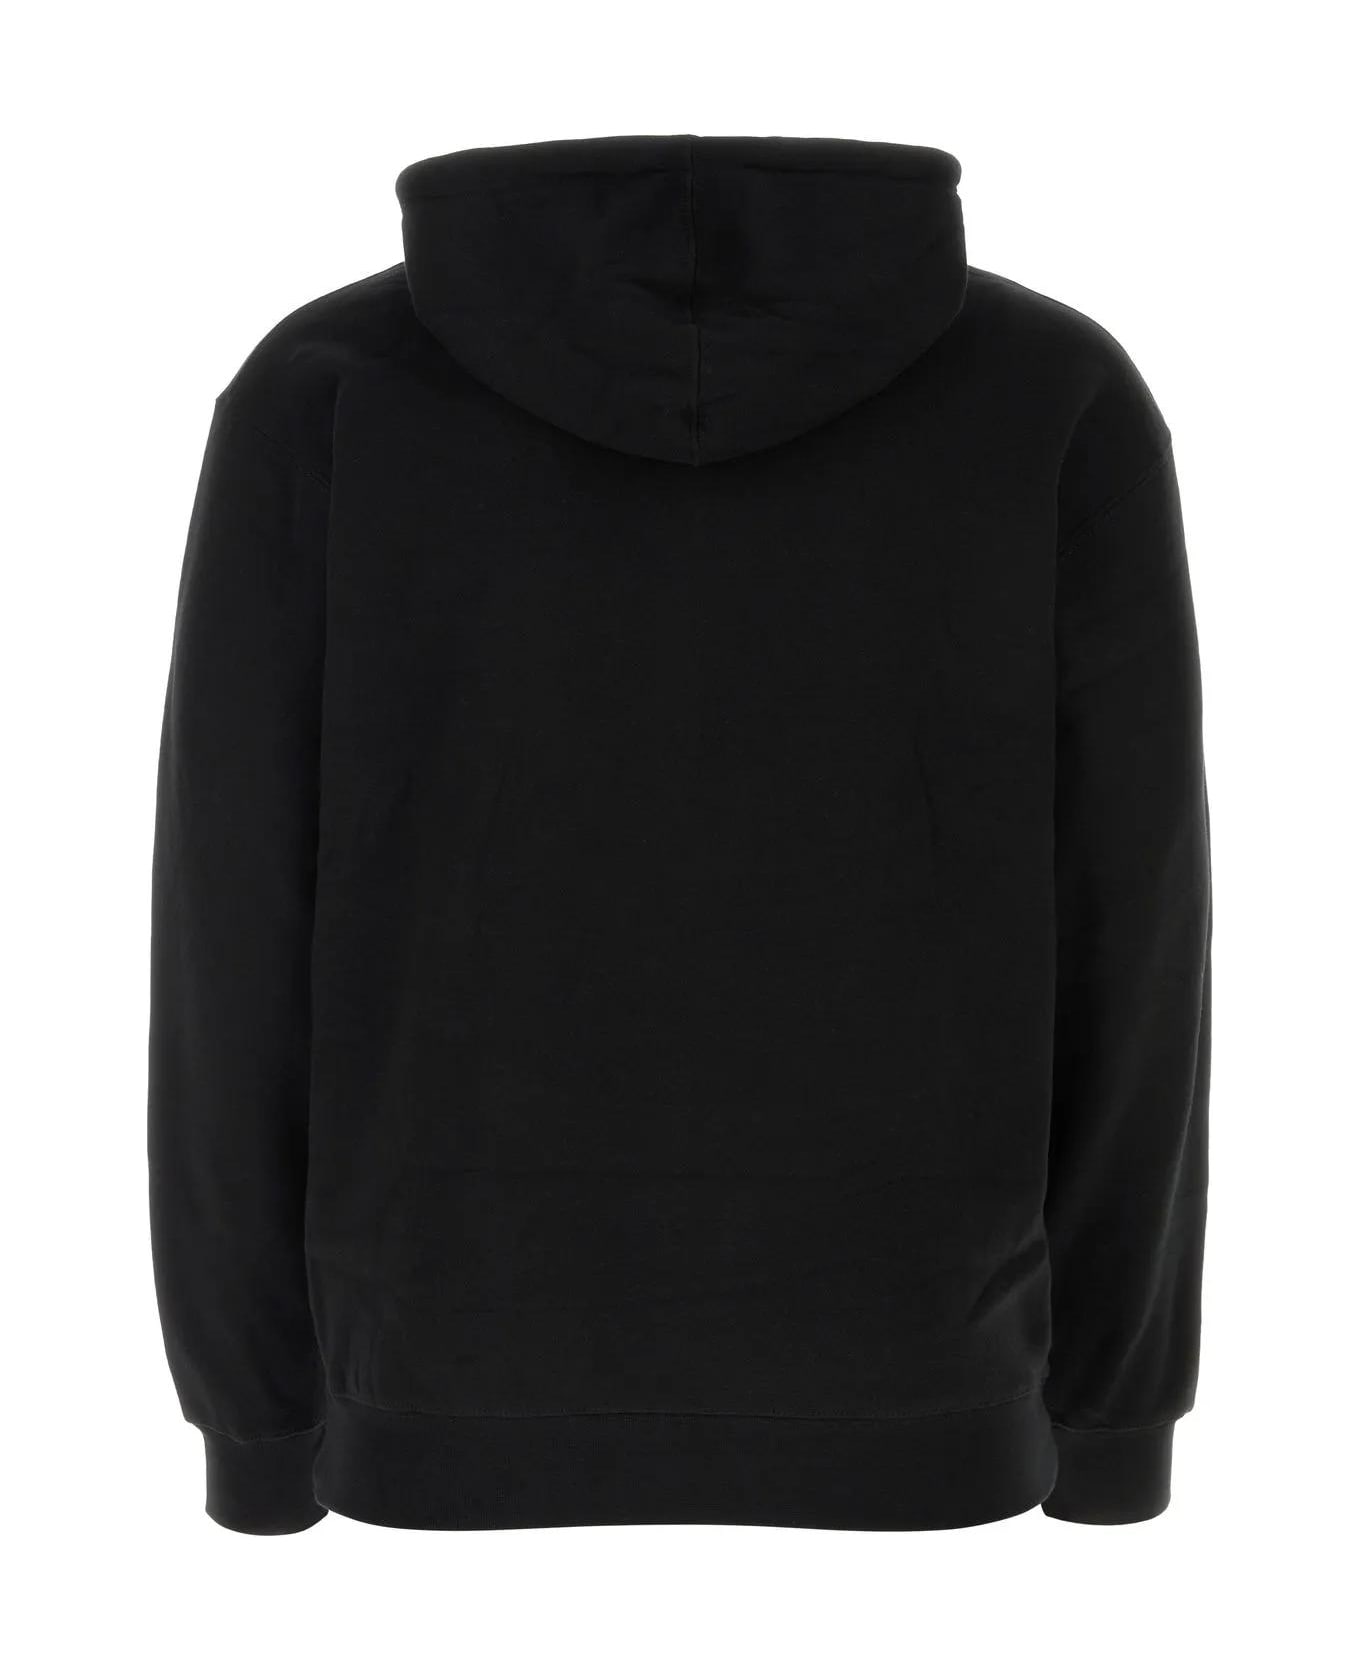 Kidsuper Black Cotton Blend Sweatshirt - Black